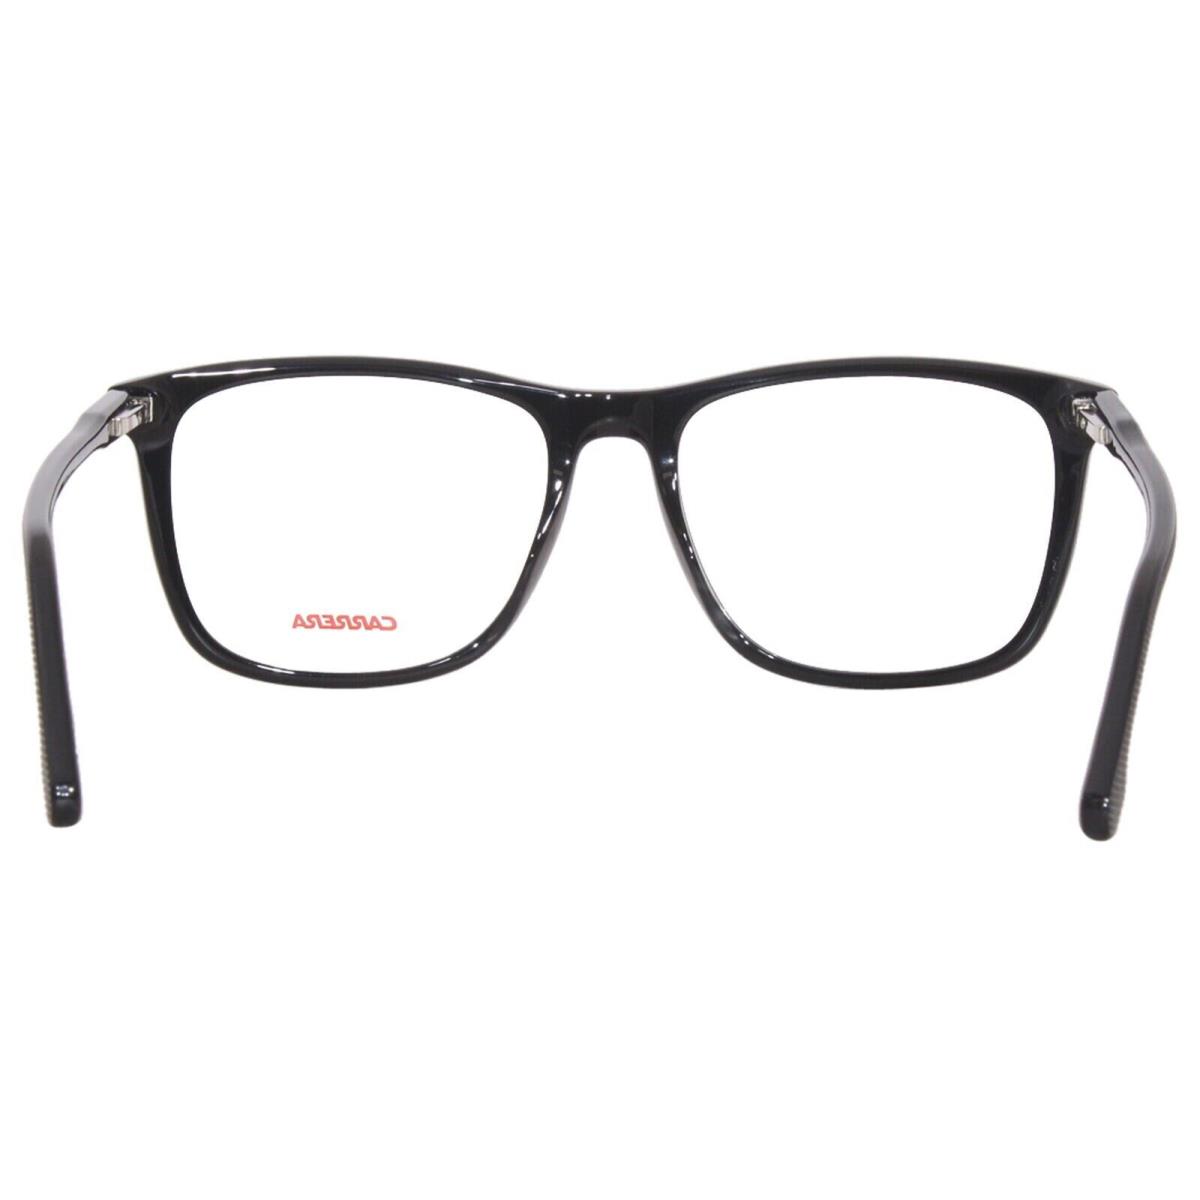 Carrera eyeglasses  - Black Frame